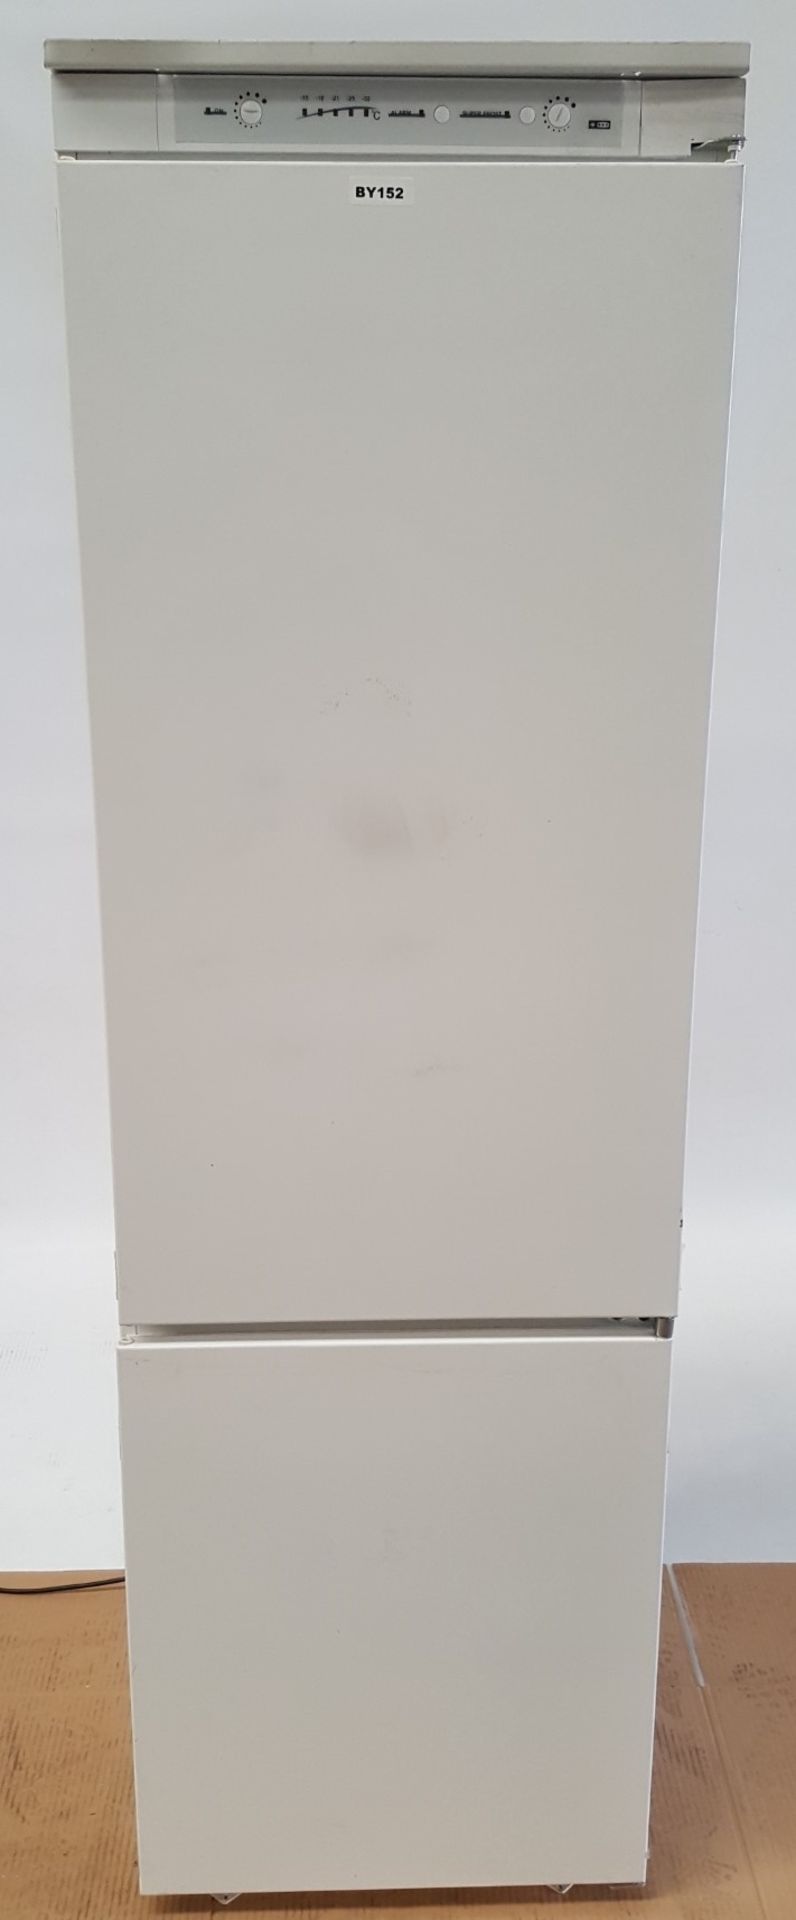 1 x Prima Integrated 70/30 Frost Free Fridge Freezer LPR472A1 - Ref BY152